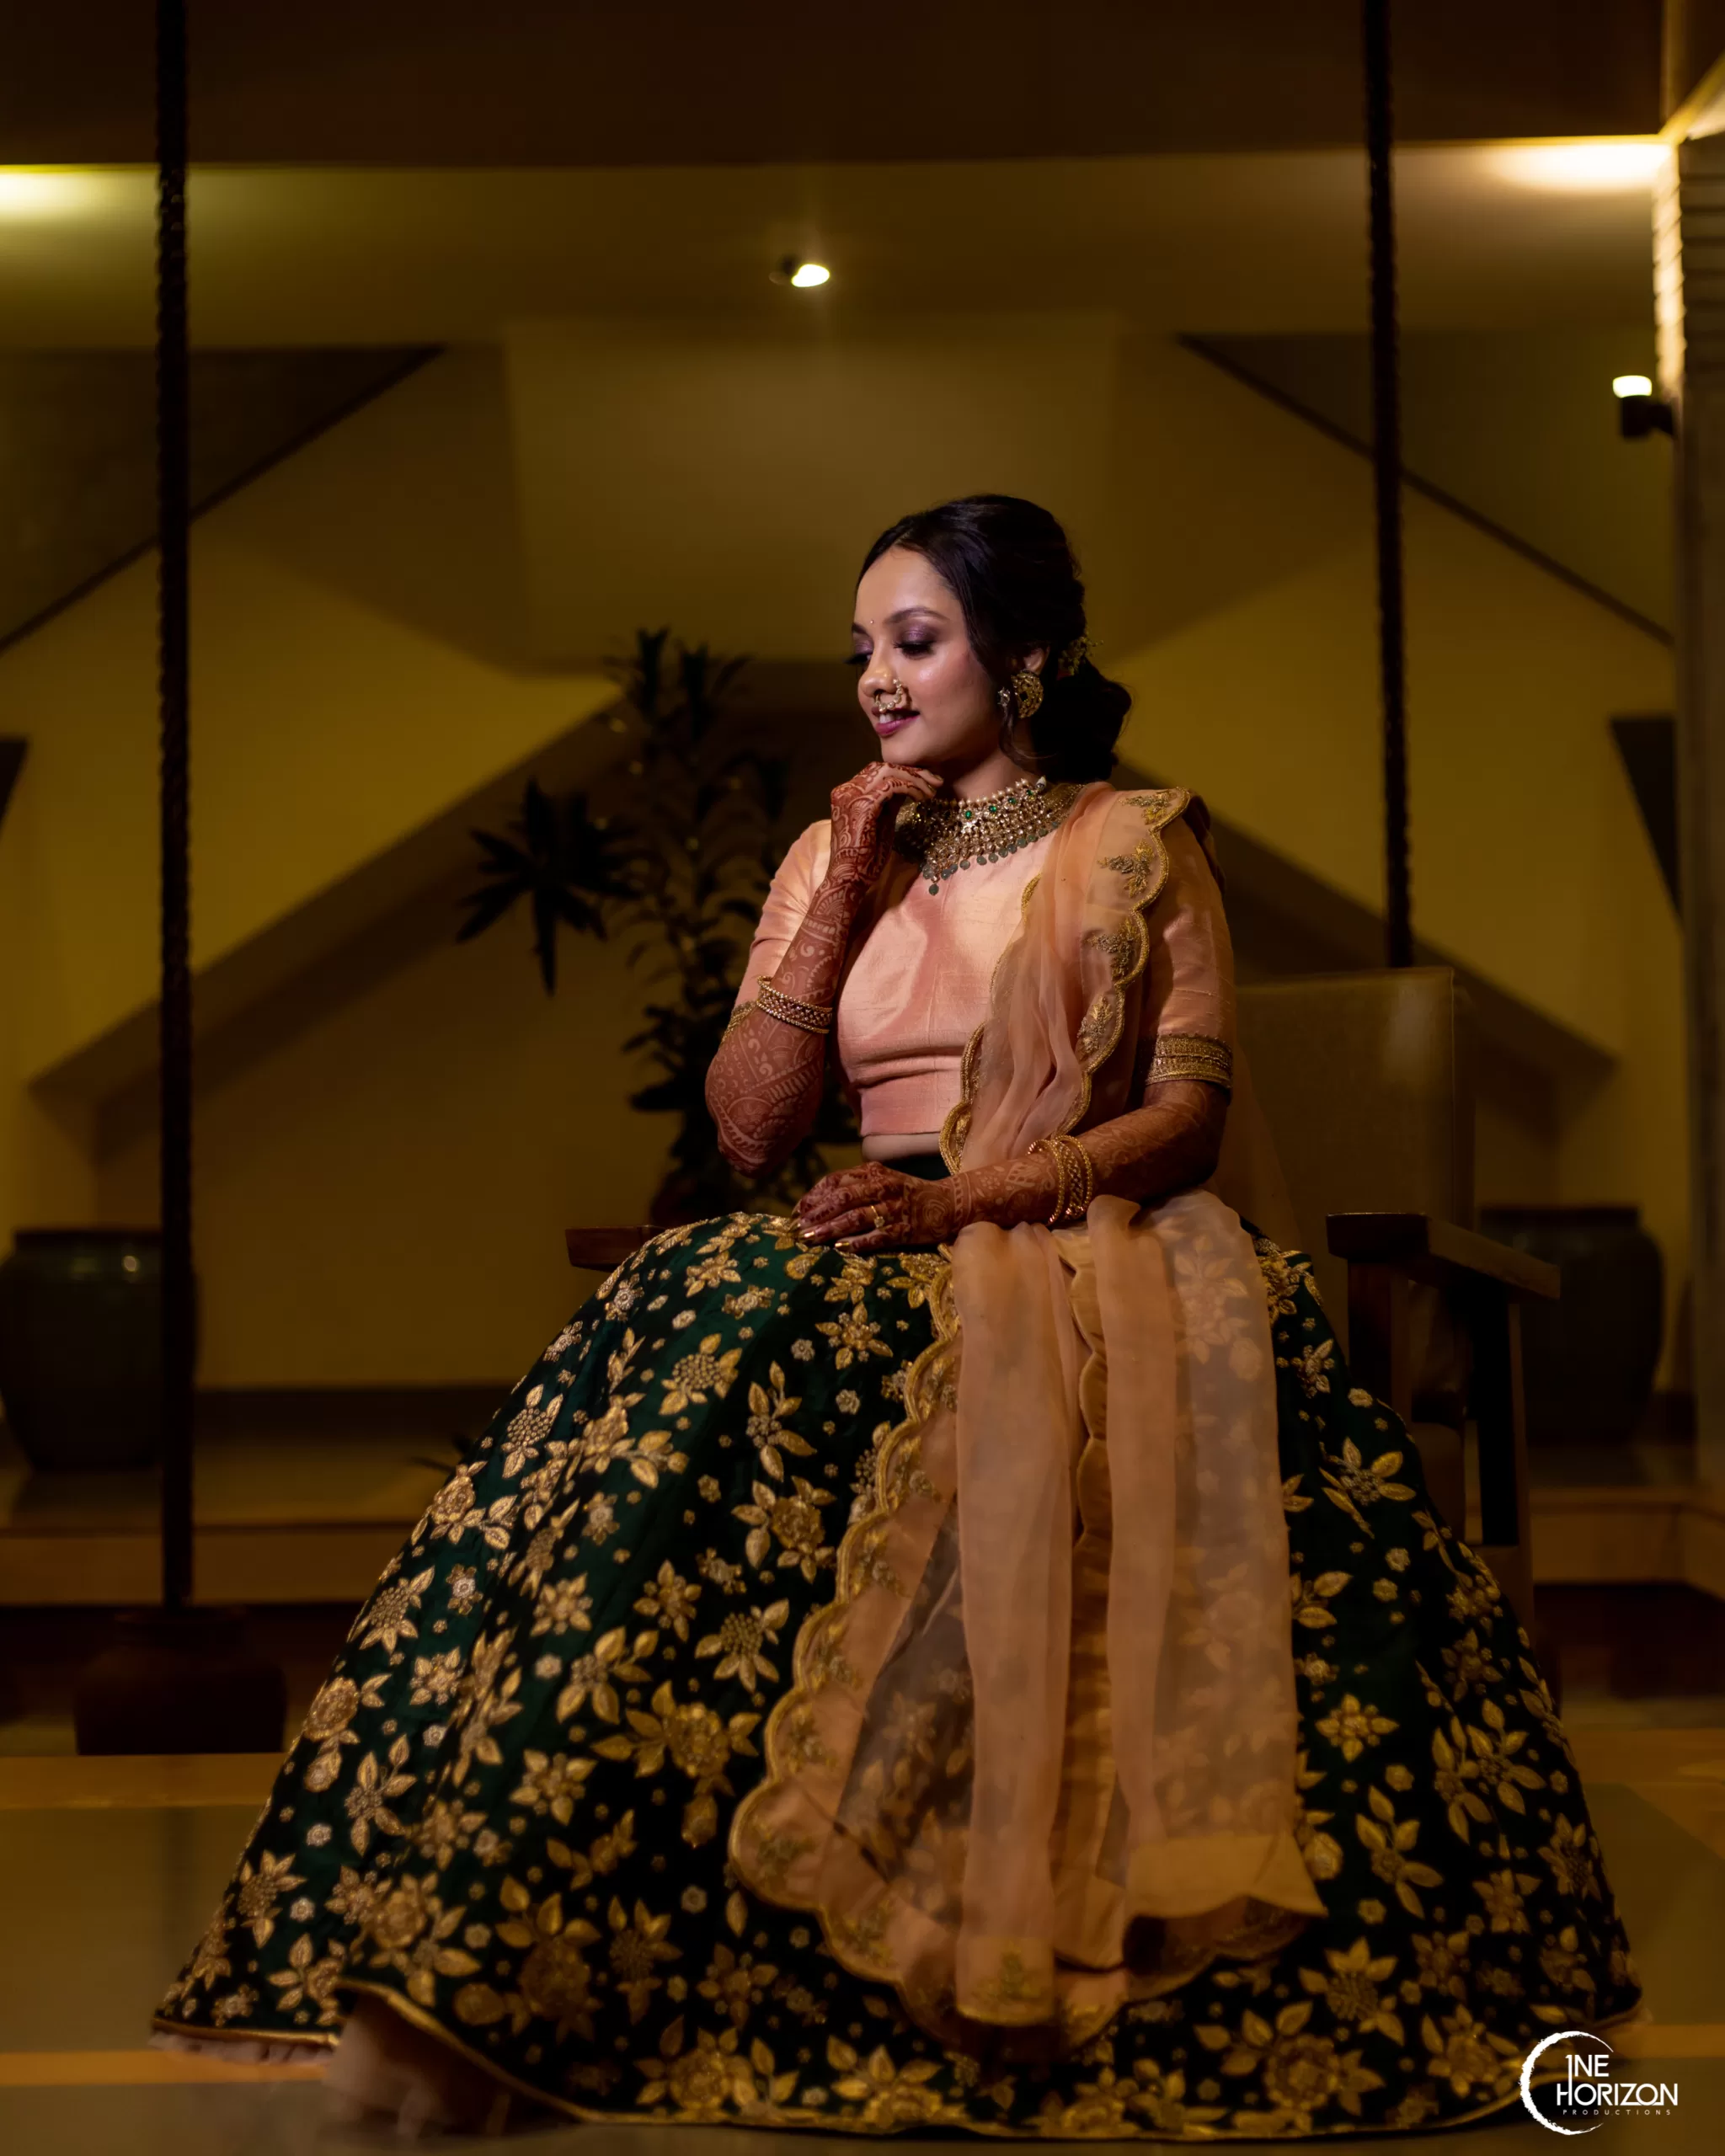 Indian Wear | Indian photoshoot, Photoshoot dress, Photography poses women